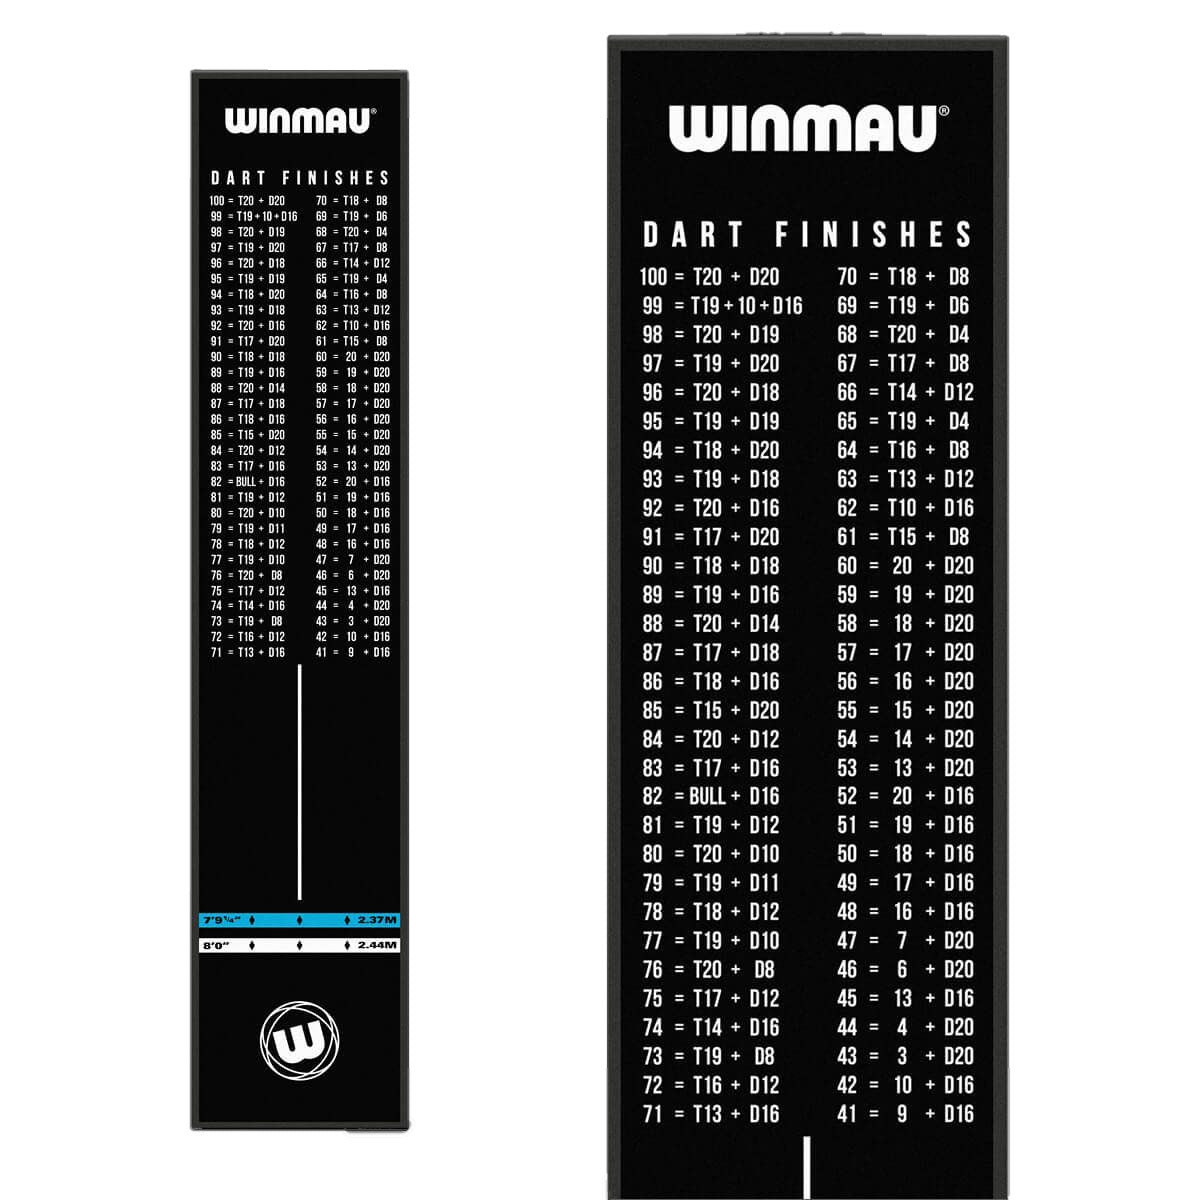 WINMAU - Outshot Dart Mat